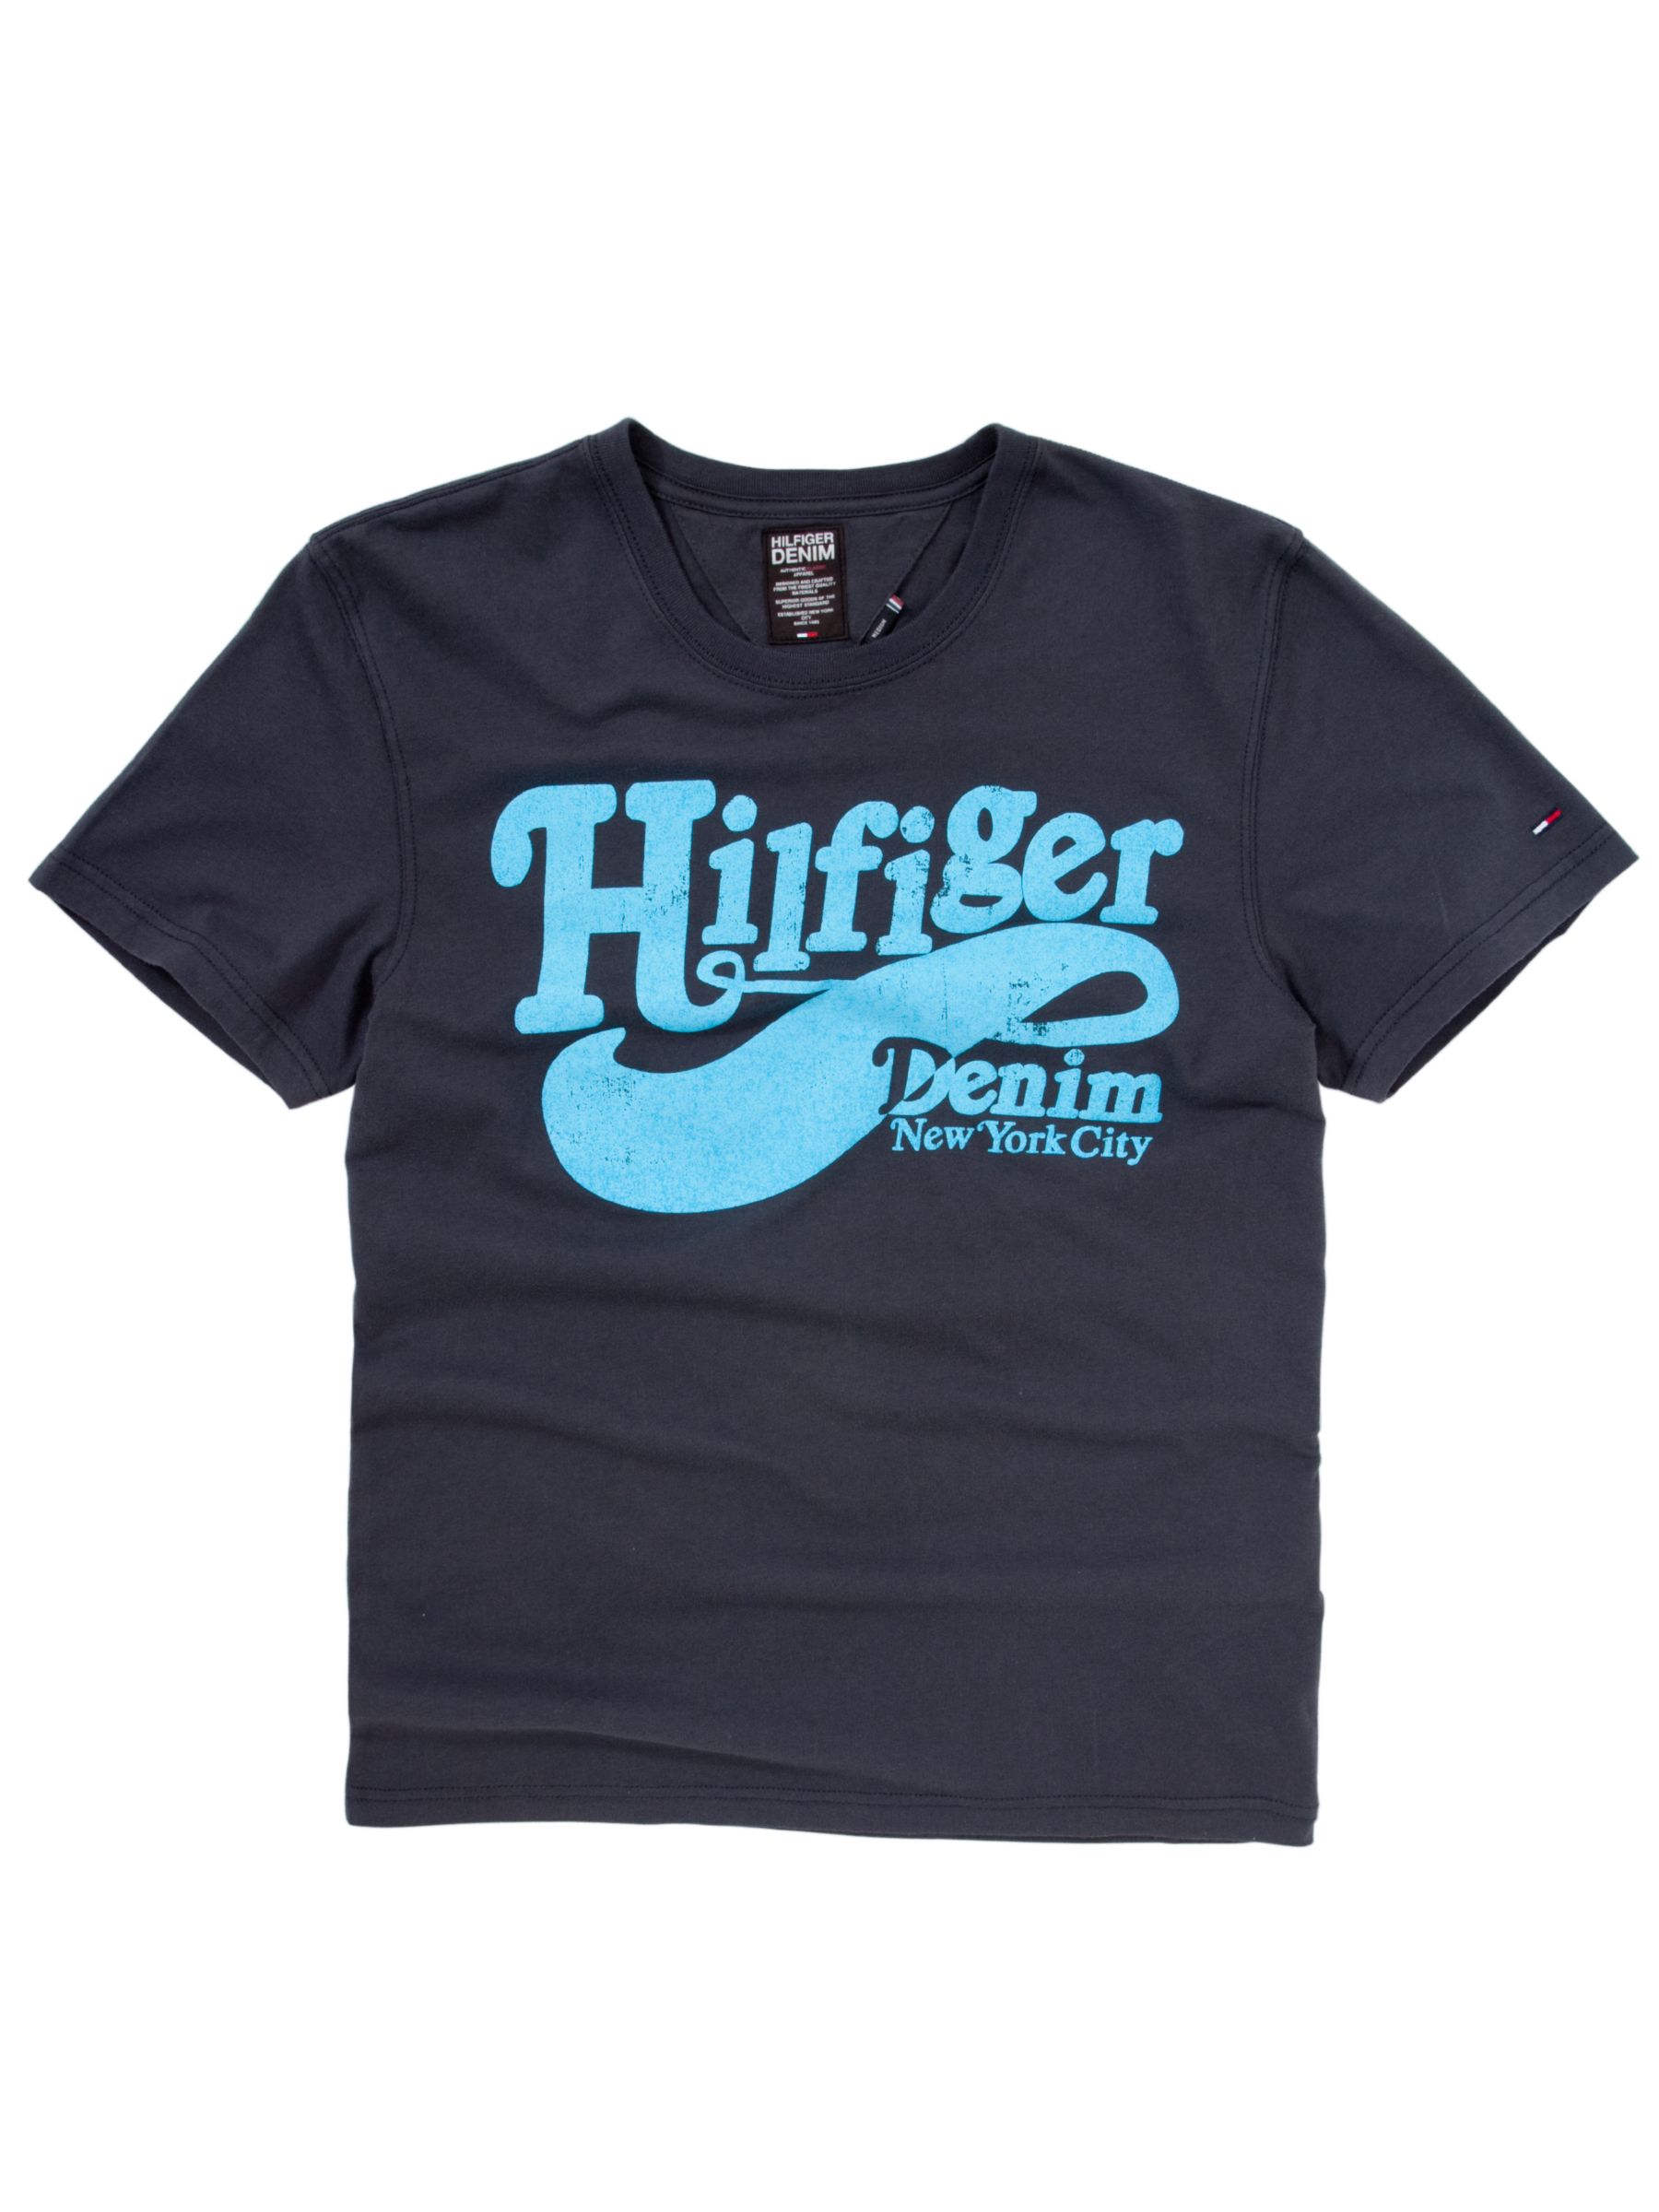 Hilfiger Denim Federer T-Shirt, Peacoat navy